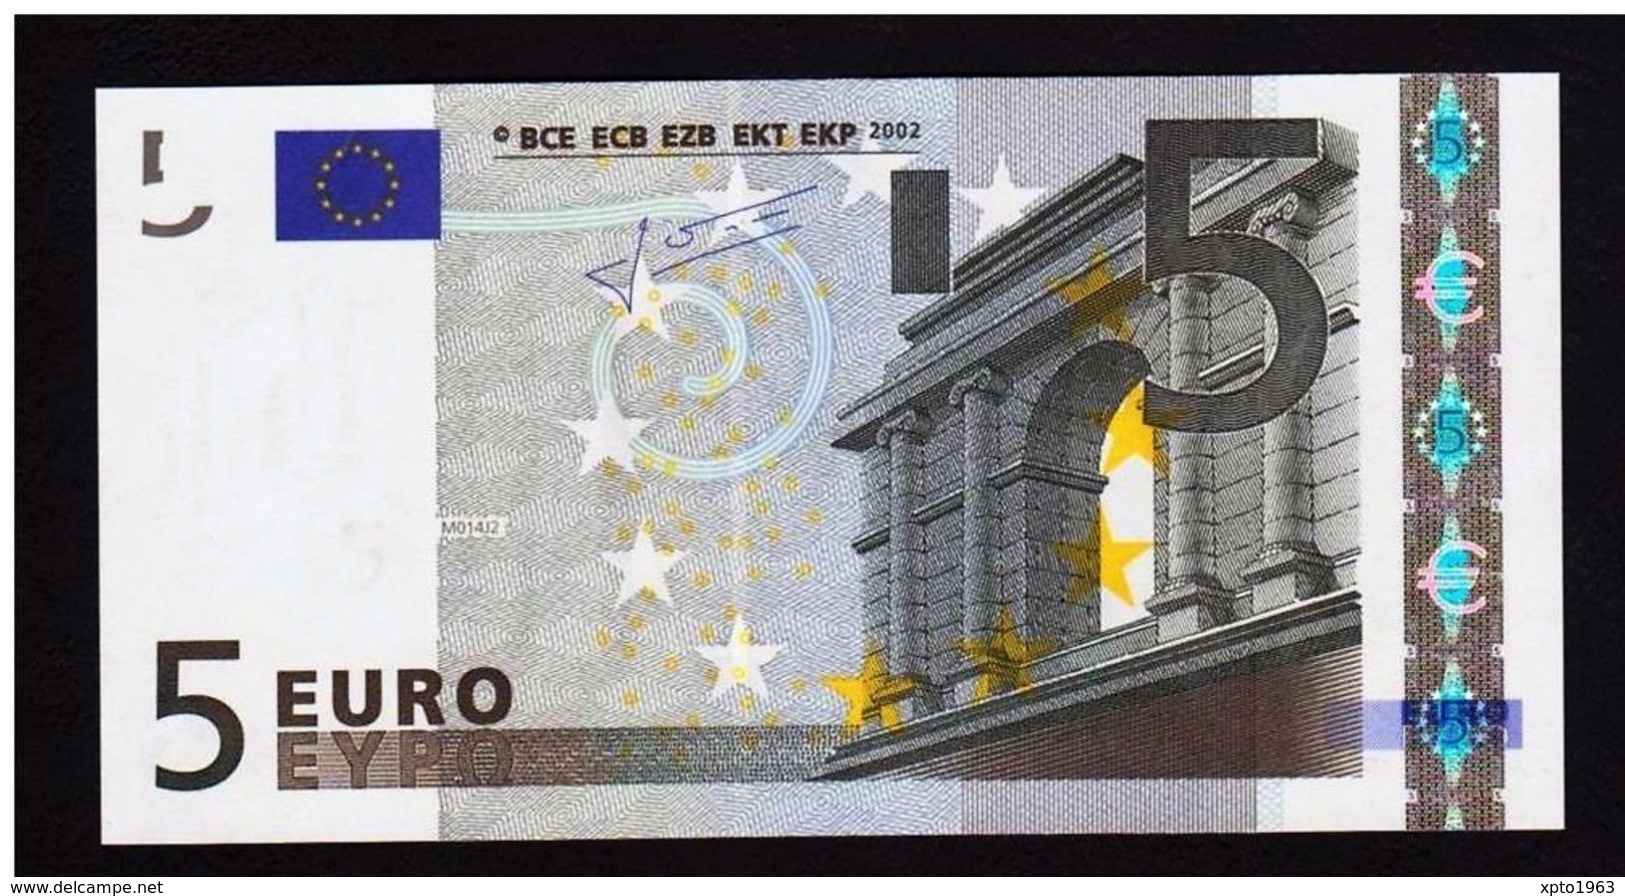 5 EURO SPAIN &#9733; V / M014J2 &#9733; - &#9733; UNC &#9733; - 5 Euro